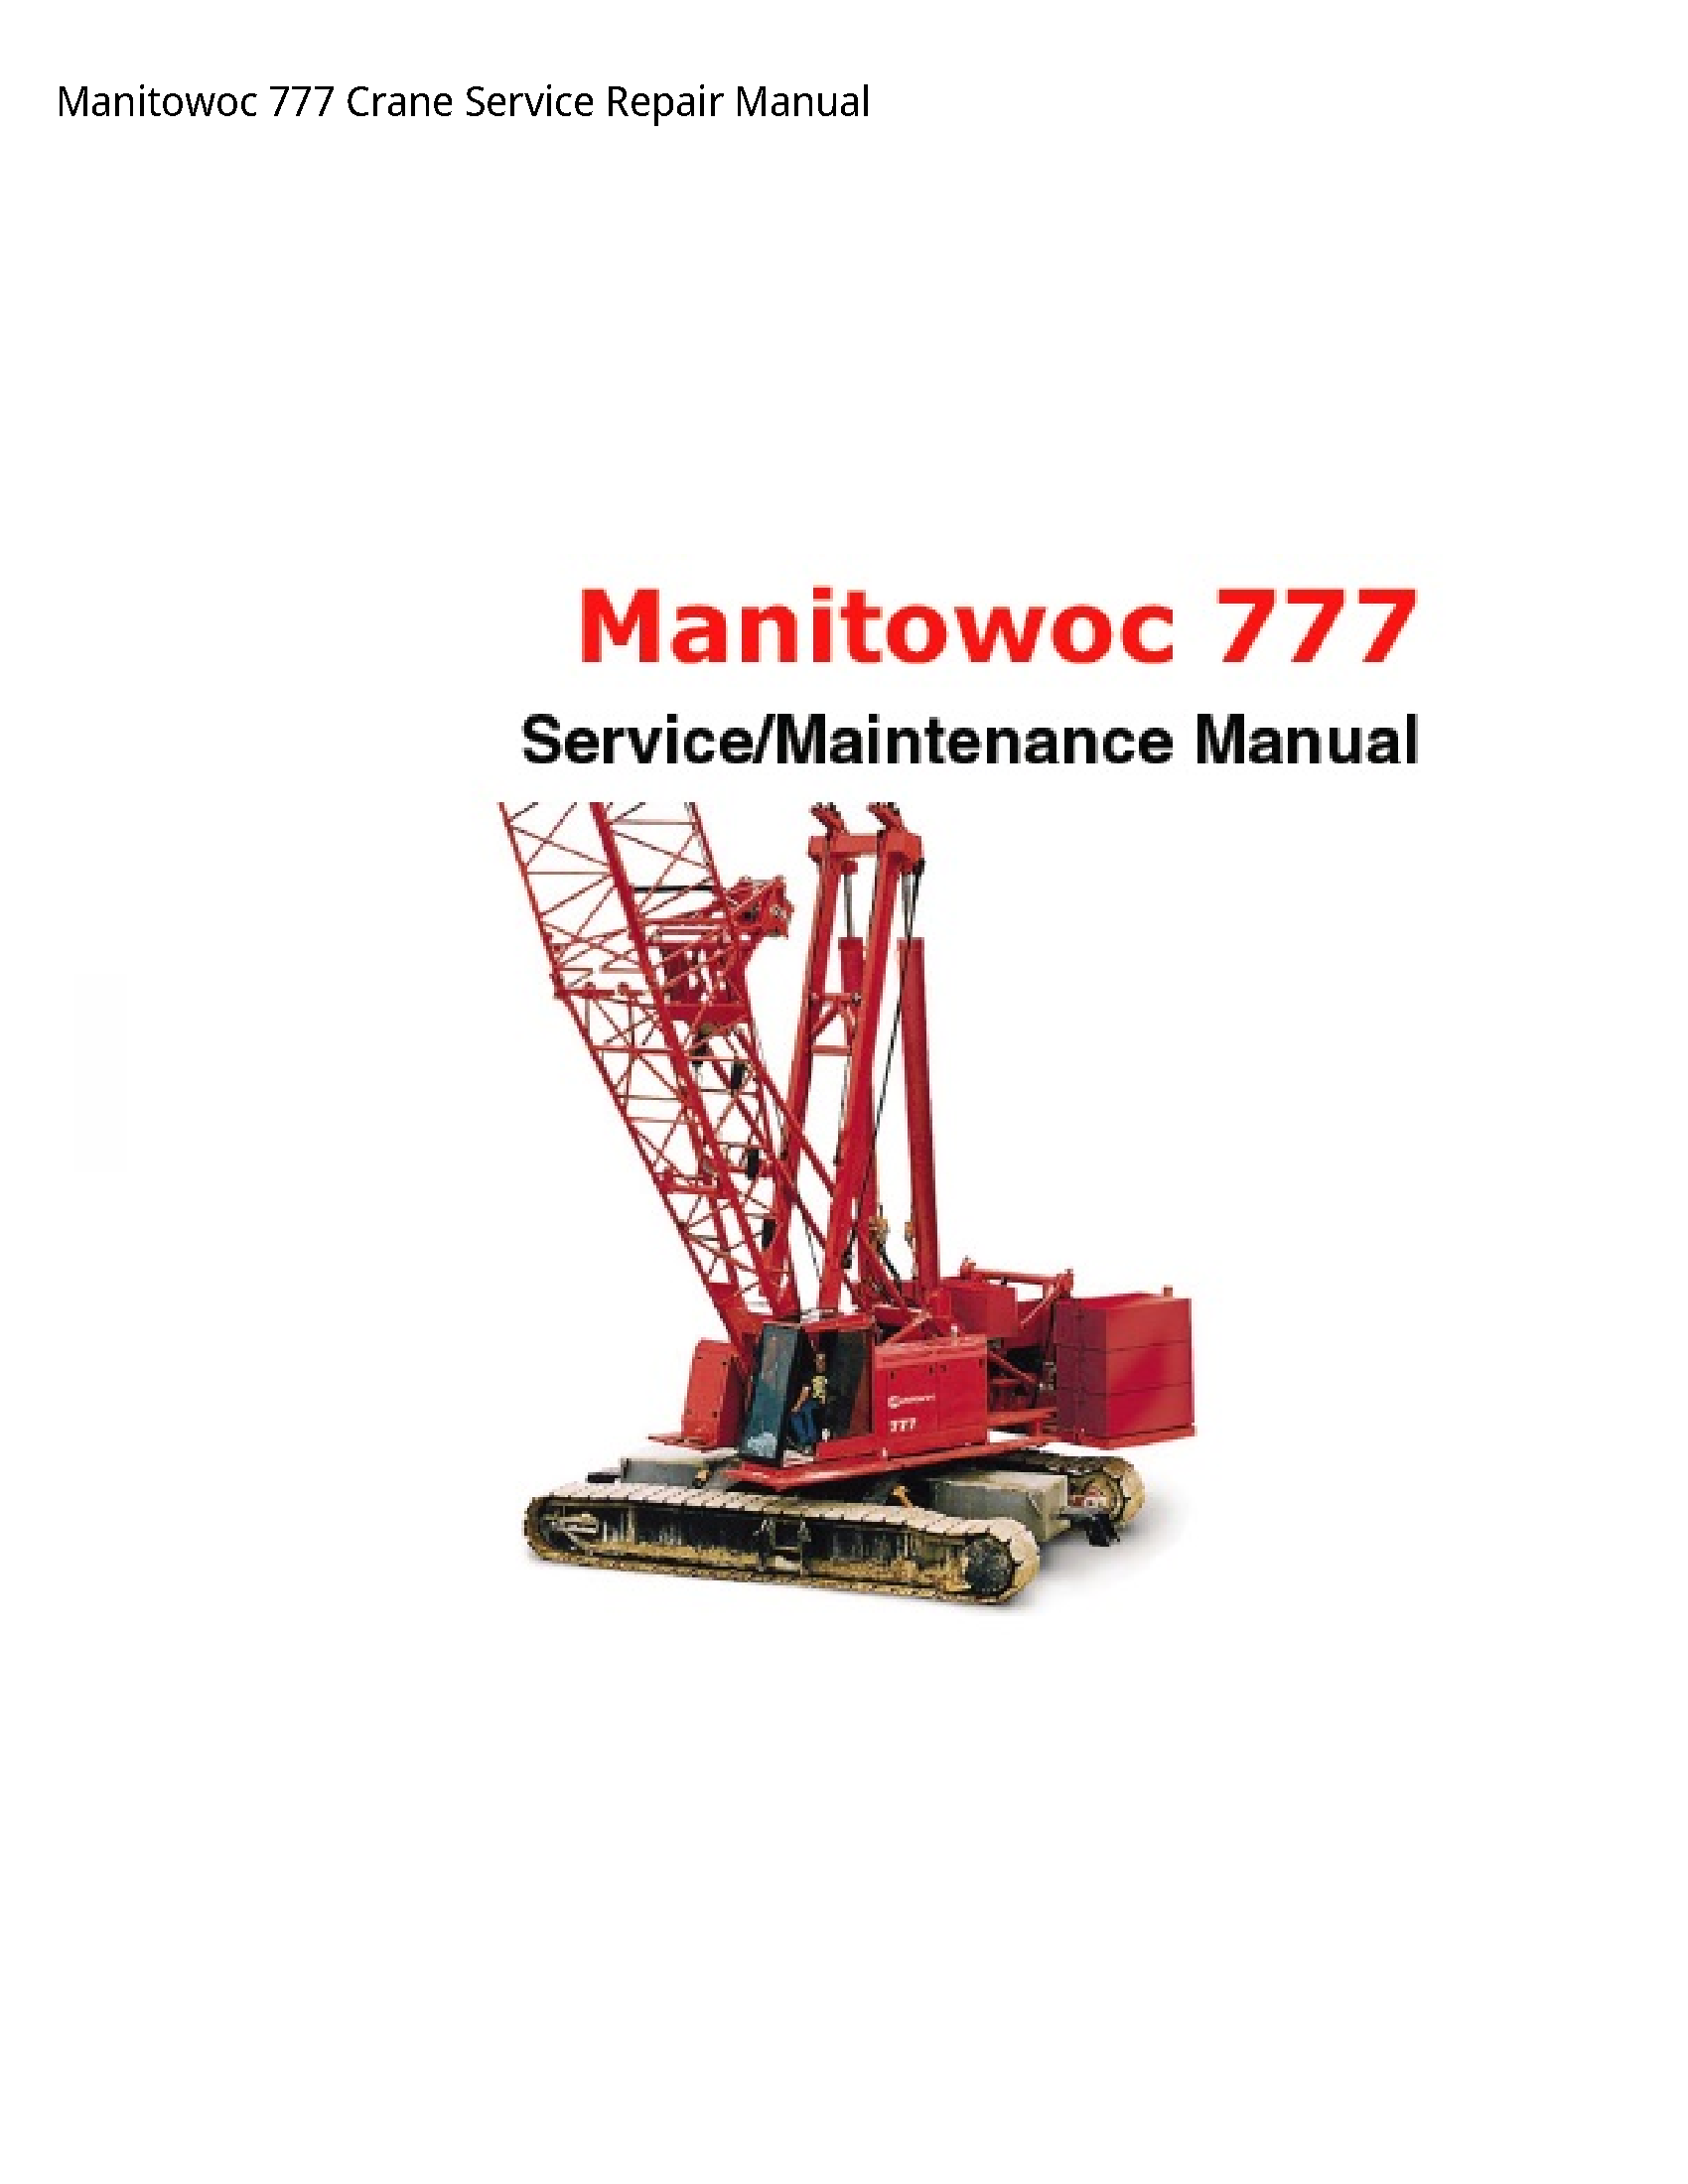 Manitowoc 777 Crane manual